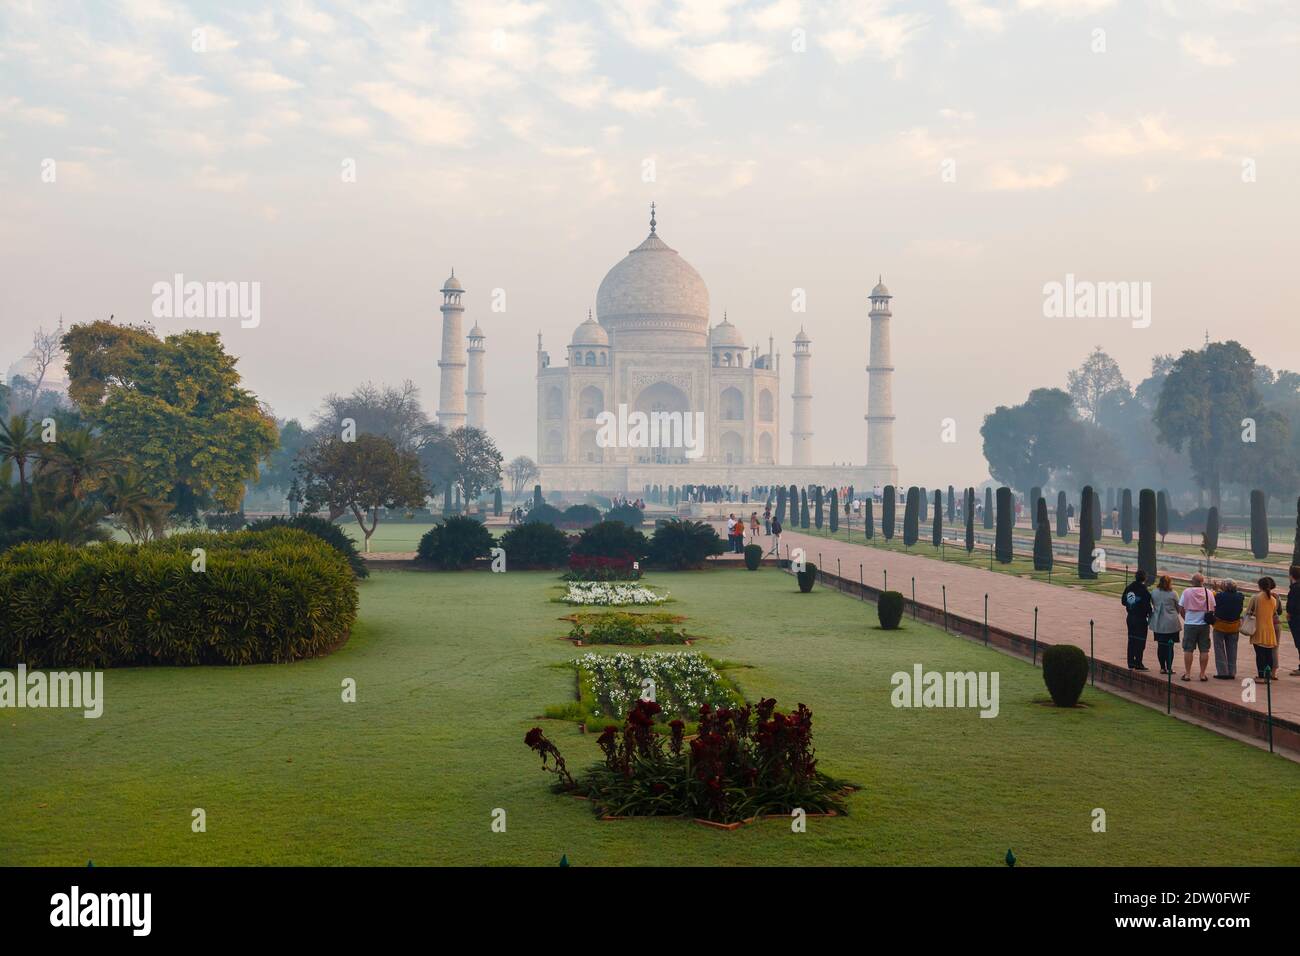 A primera hora de la mañana vista del emblemático Taj Mahal, una tumba de mármol blanco mausoleo de Mumtaz Mahal, a la luz de la mañana, Agra, estado indio de Uttar Pradesh Foto de stock